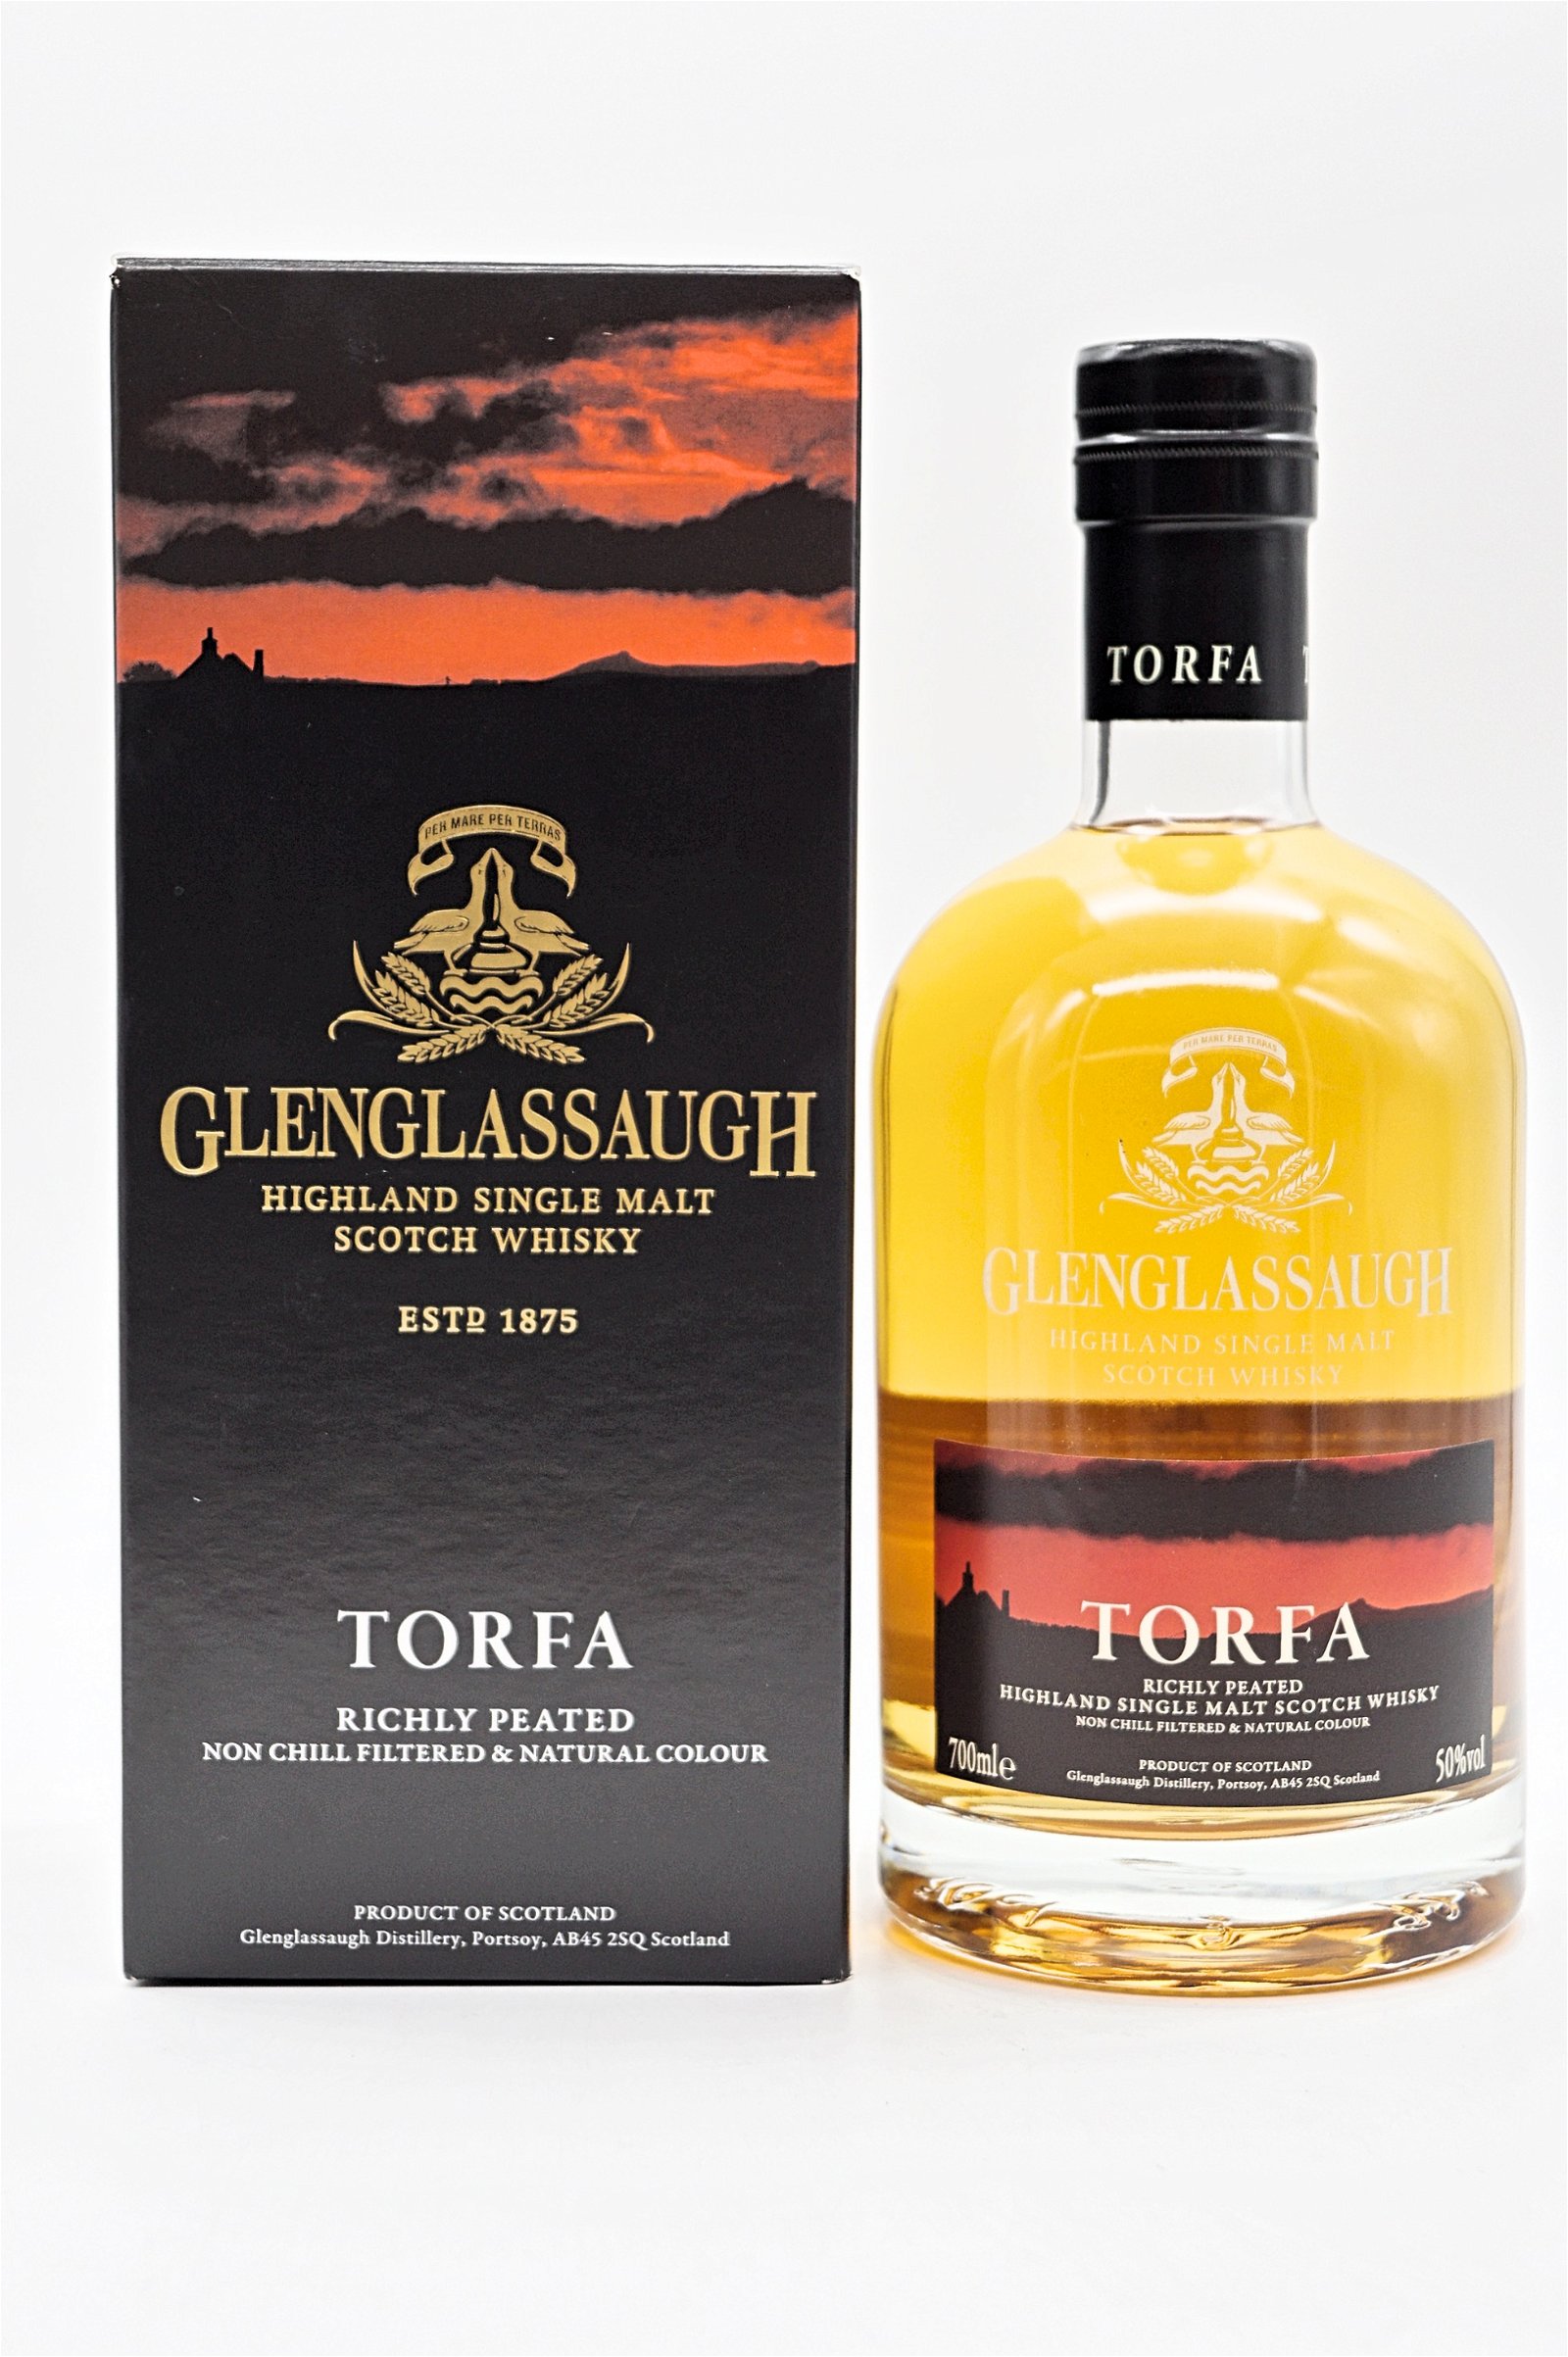 Glenglassaugh Torfa Richly Peated Highland Single Malt Scotch Whisky